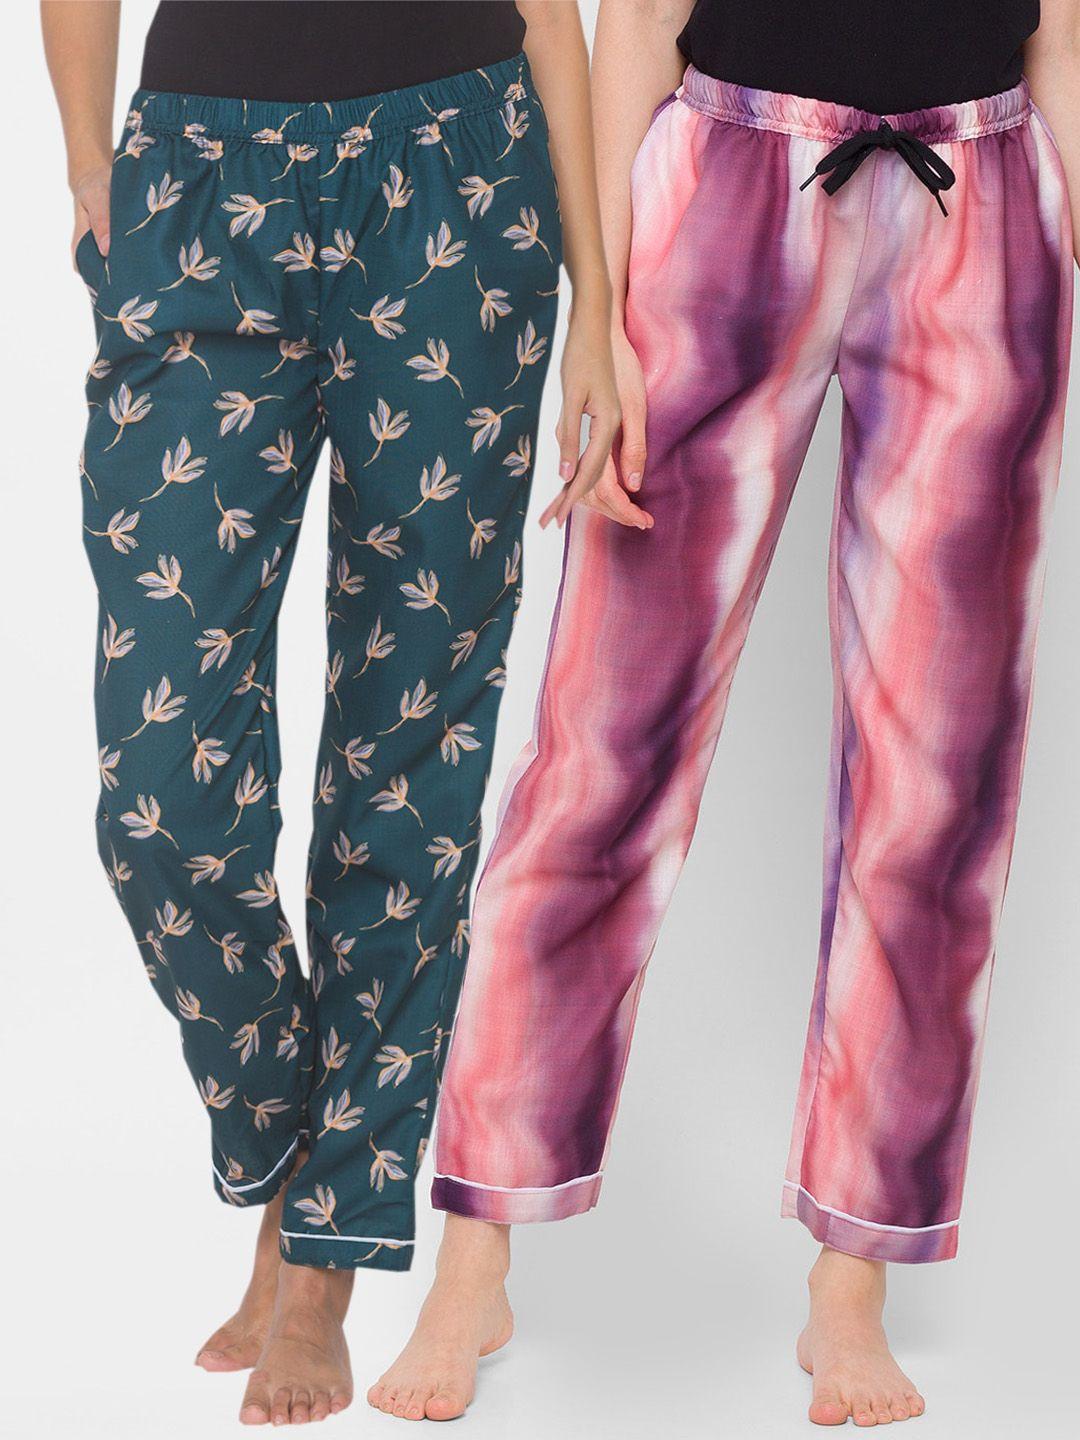 fashionrack women pack of 2 printed cotton lounge pants